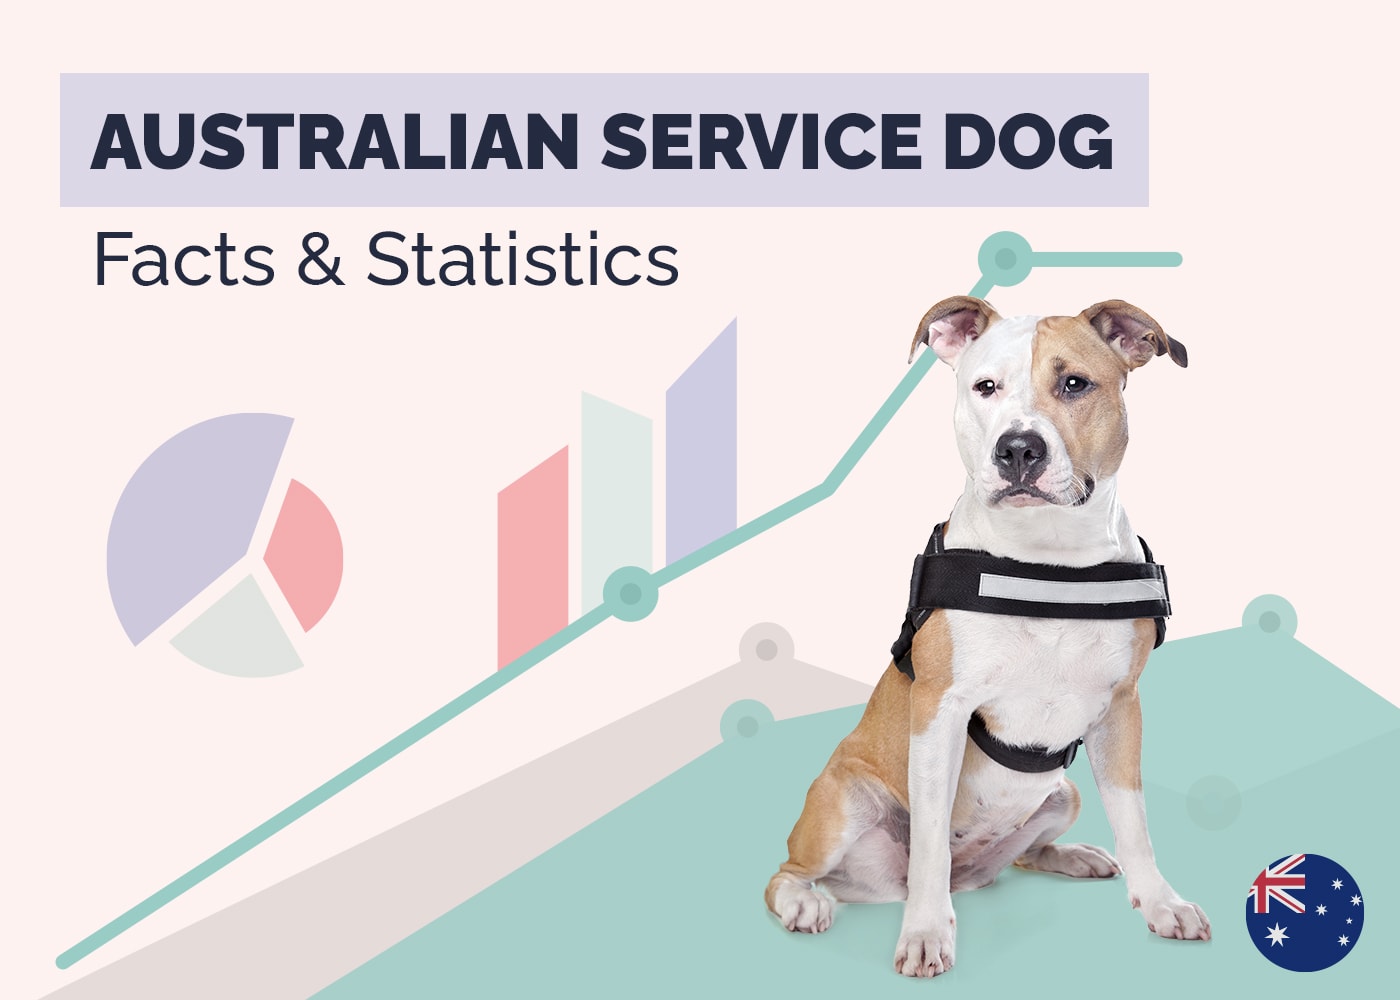 Australia Service Dog Facts & Statistics